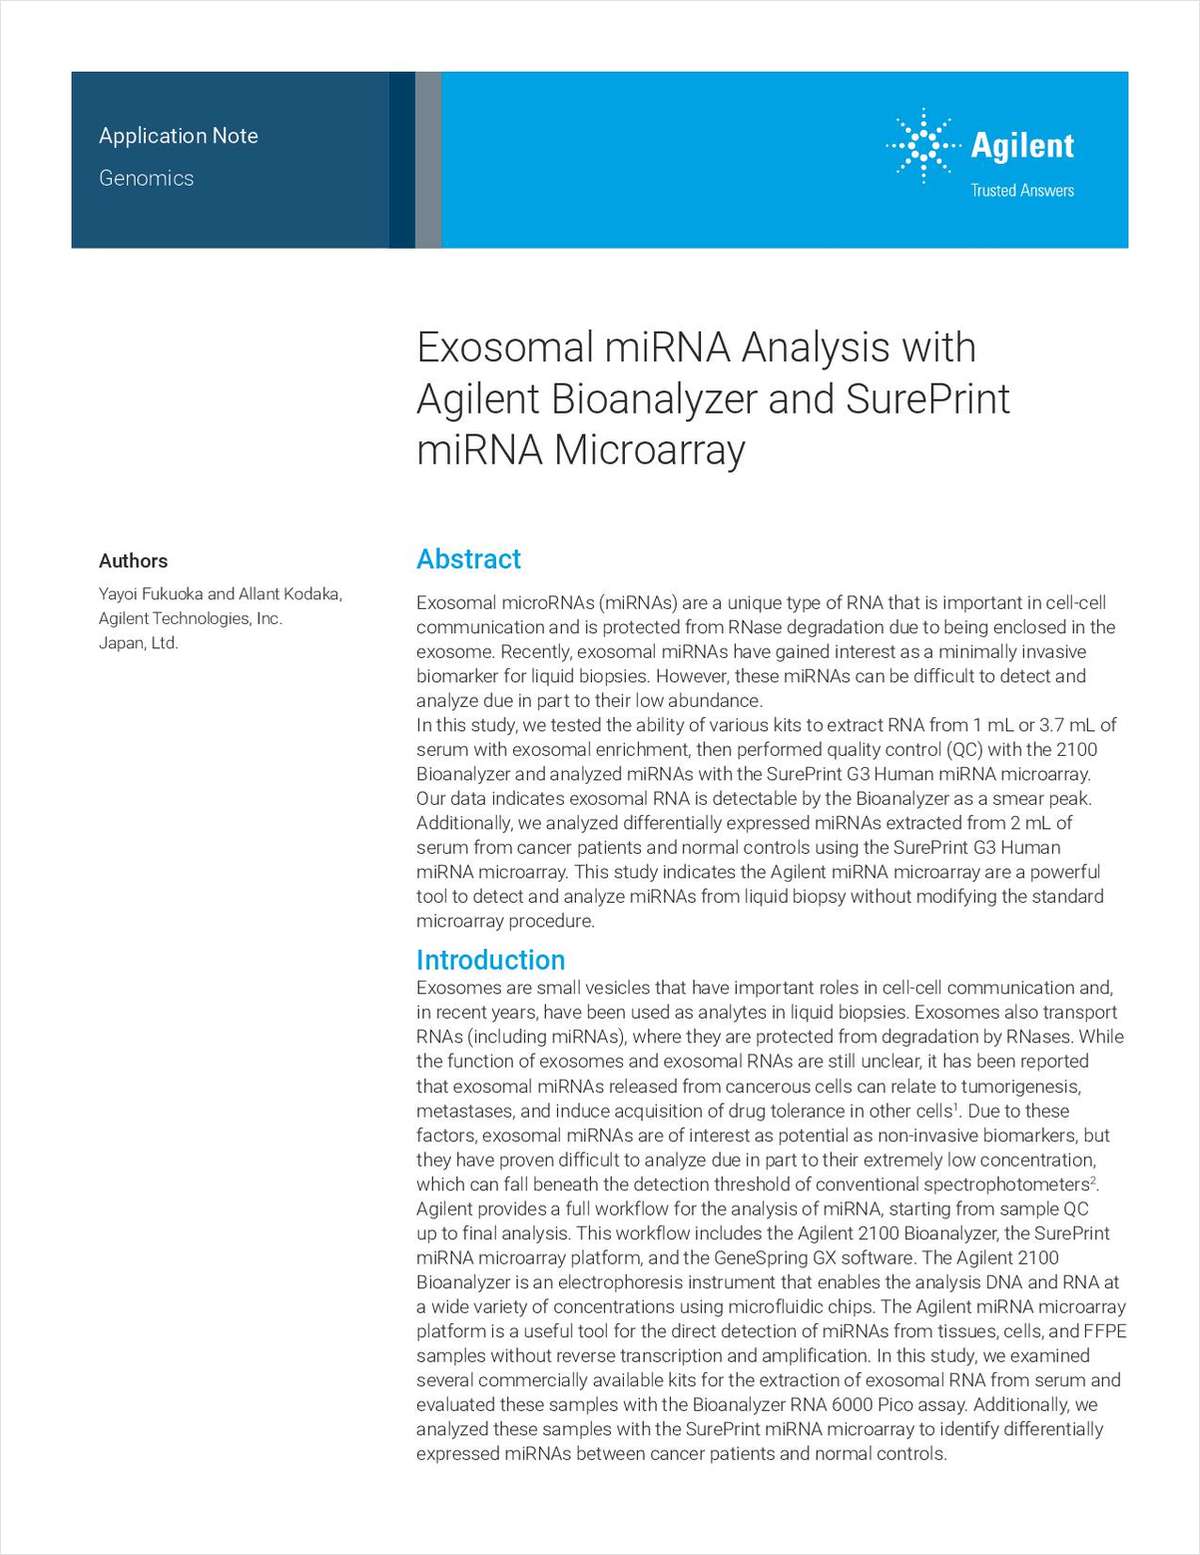 Exosomal miRNA Analysis with Agilent Bioanalyzer and SurePrint miRNA Microarray